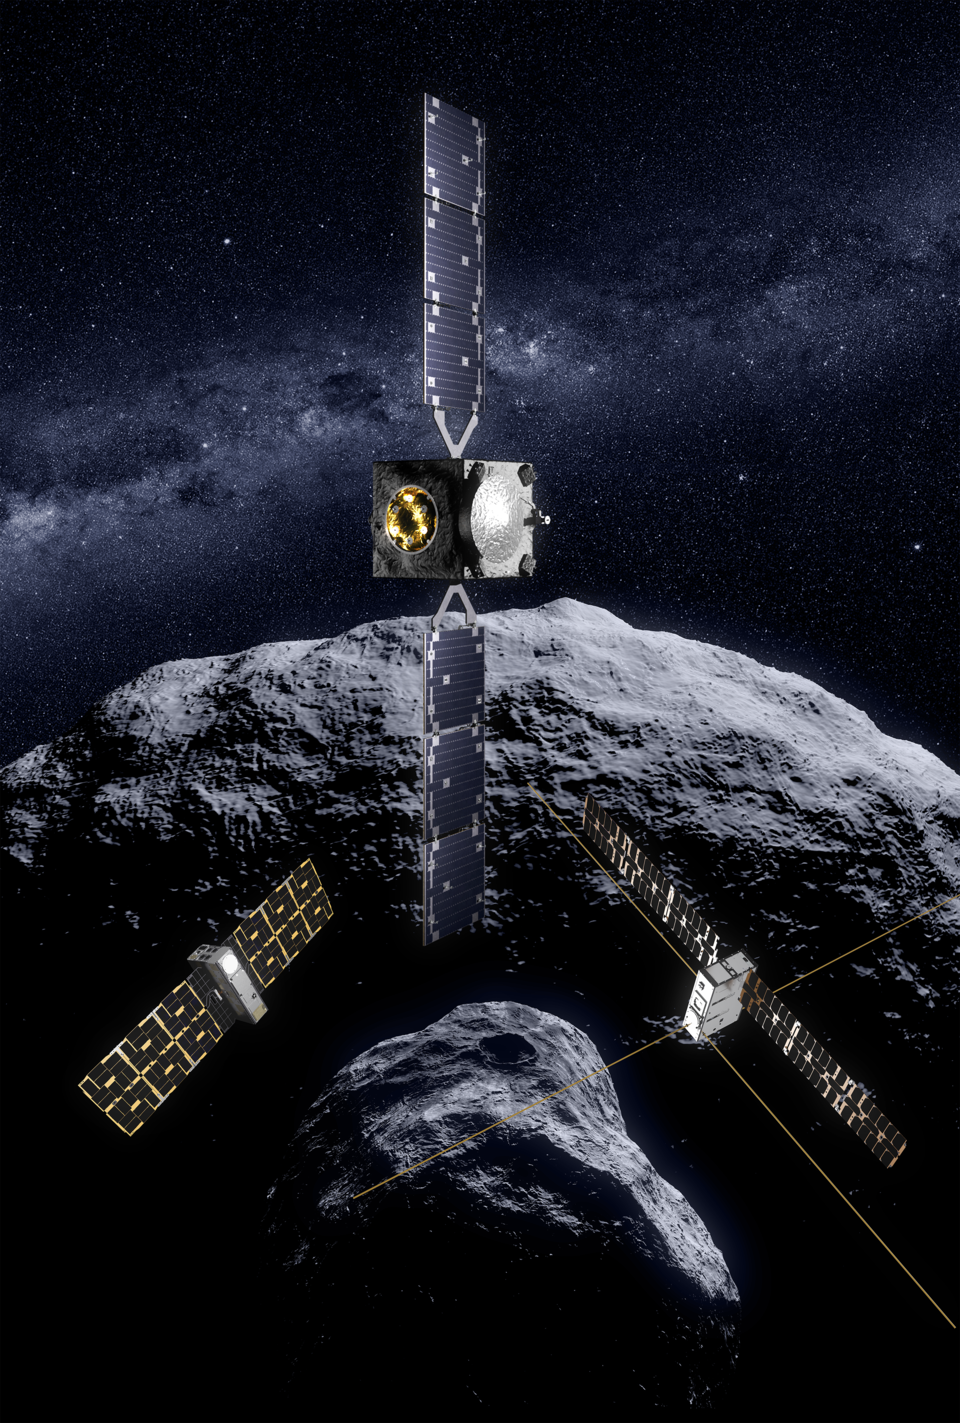 Hera asteroid mission